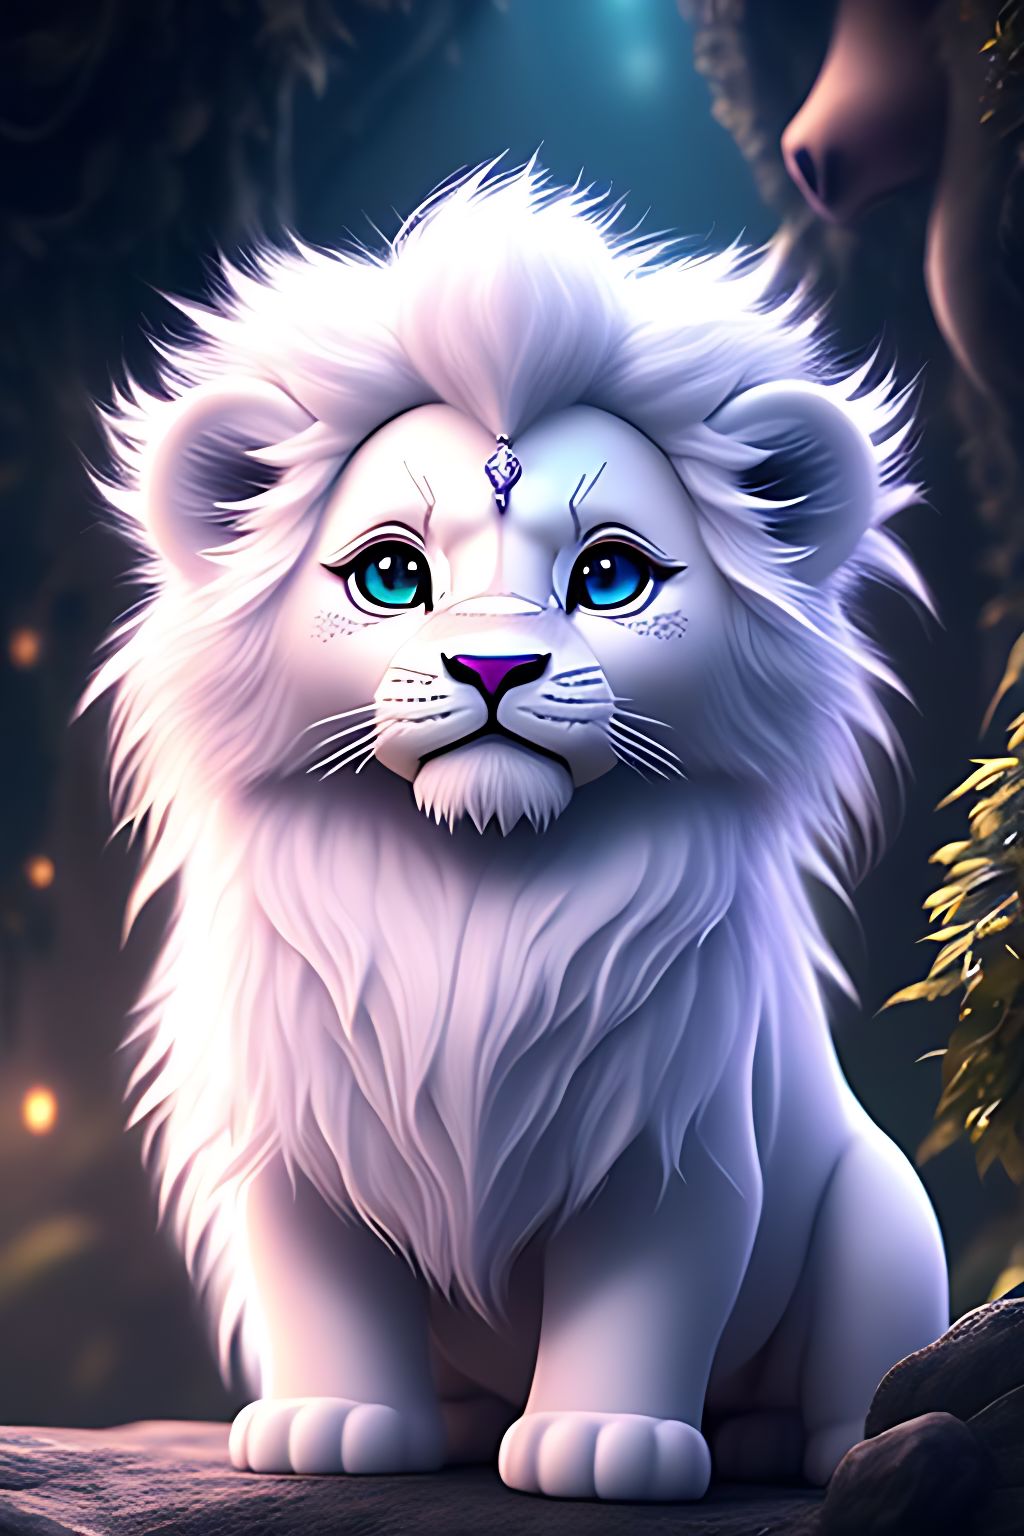 cute lion